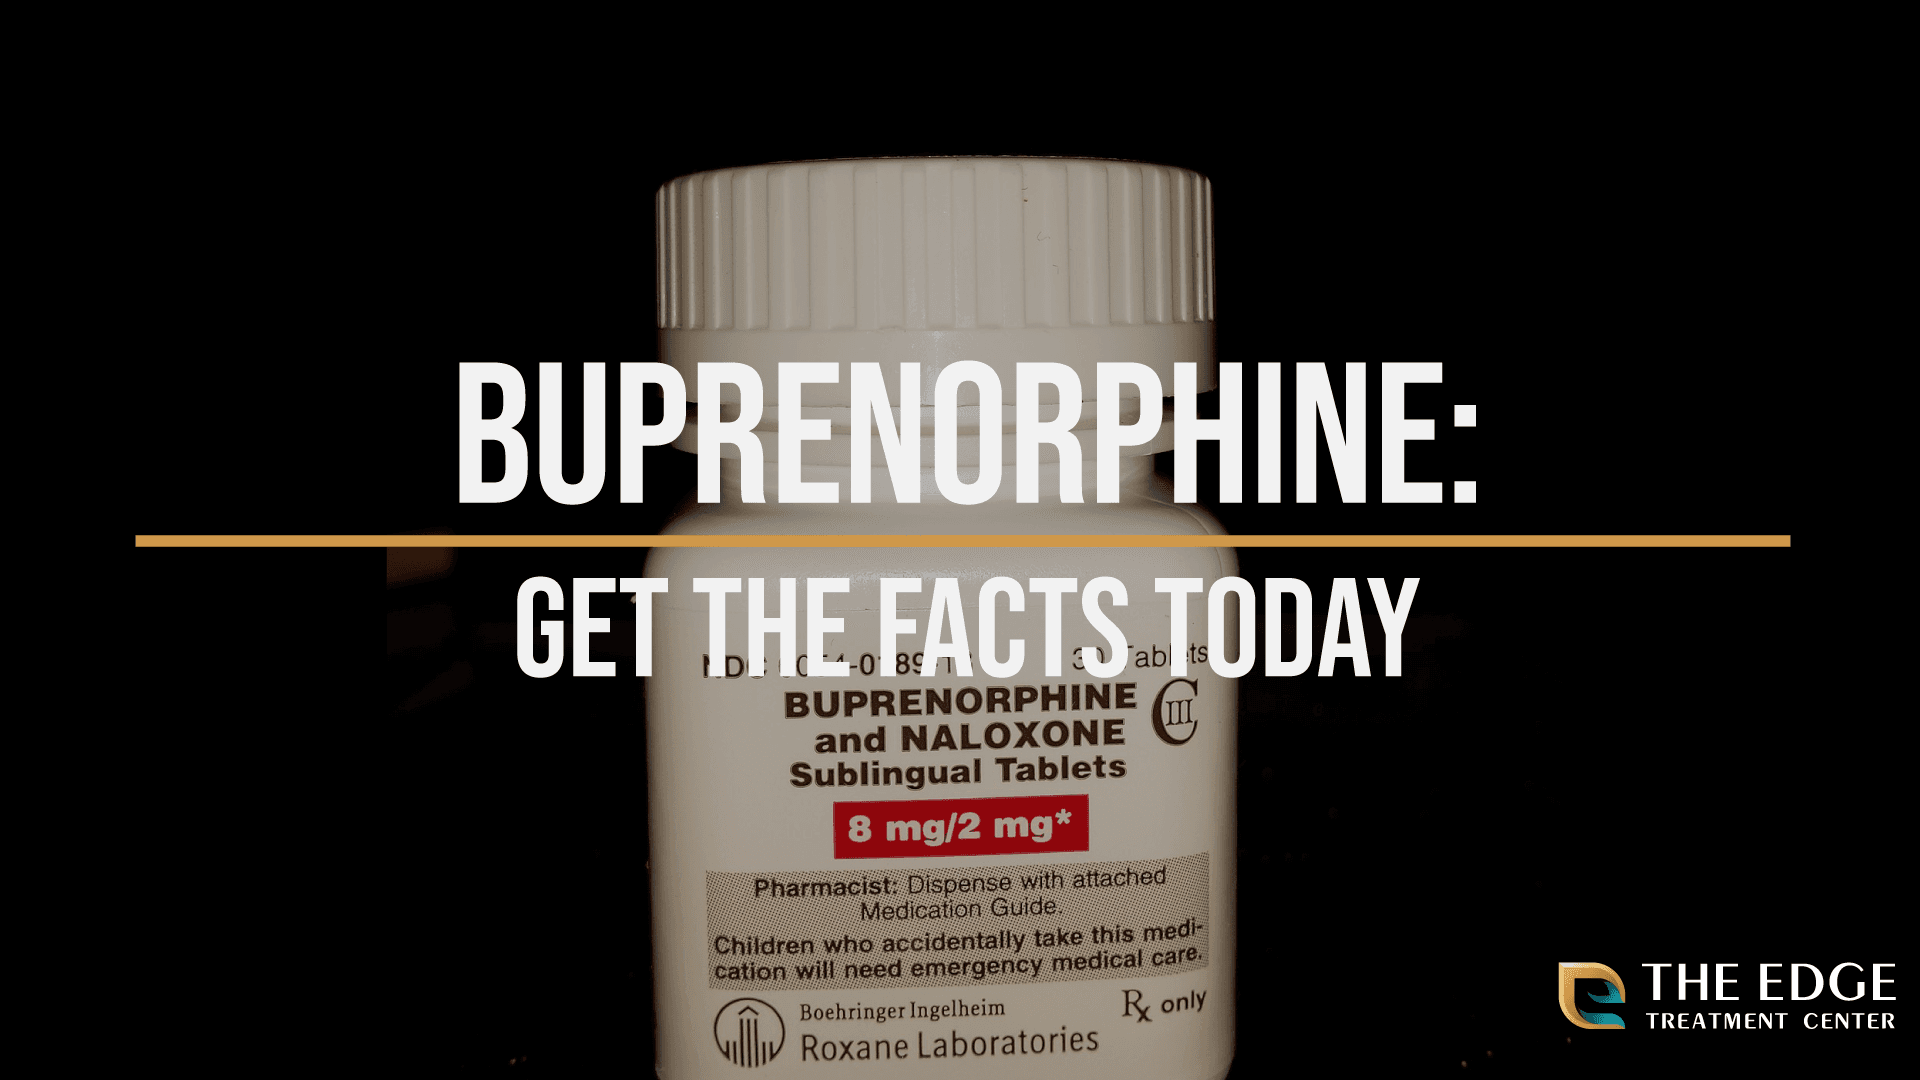 What is Buprenorphine?